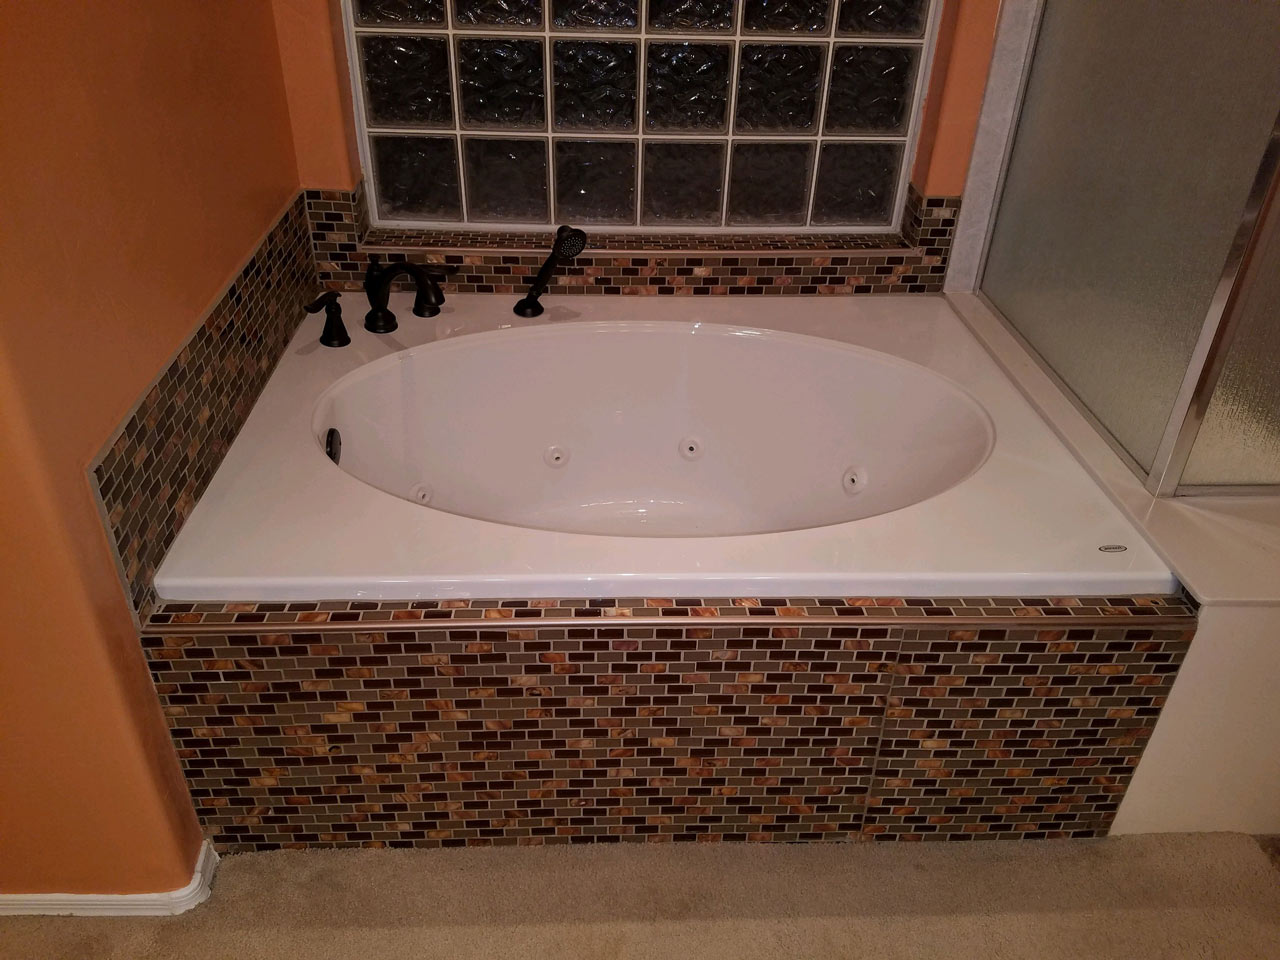 Finished Bath Installation with Tile Finish